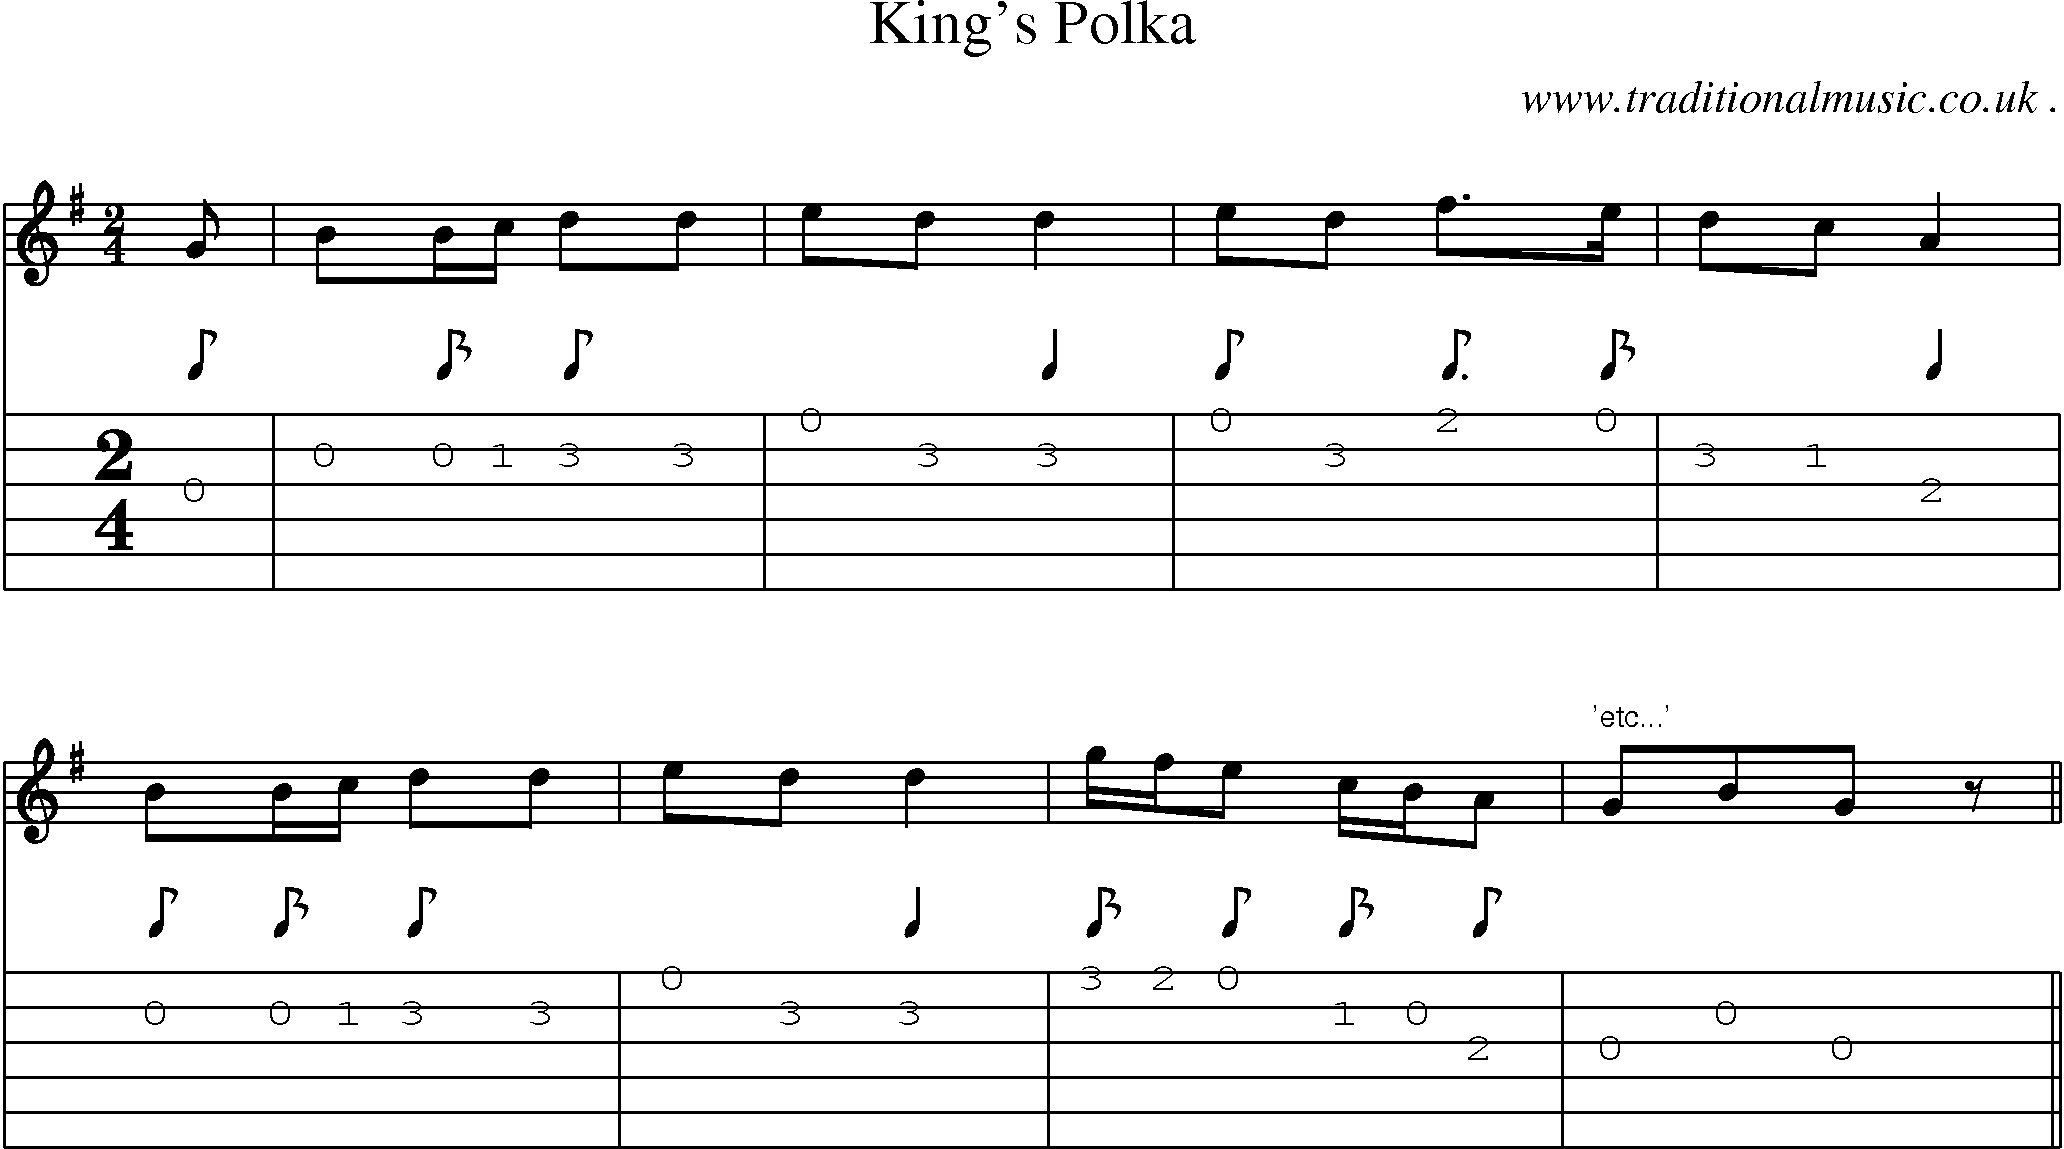 Sheet-Music and Guitar Tabs for Kings Polka